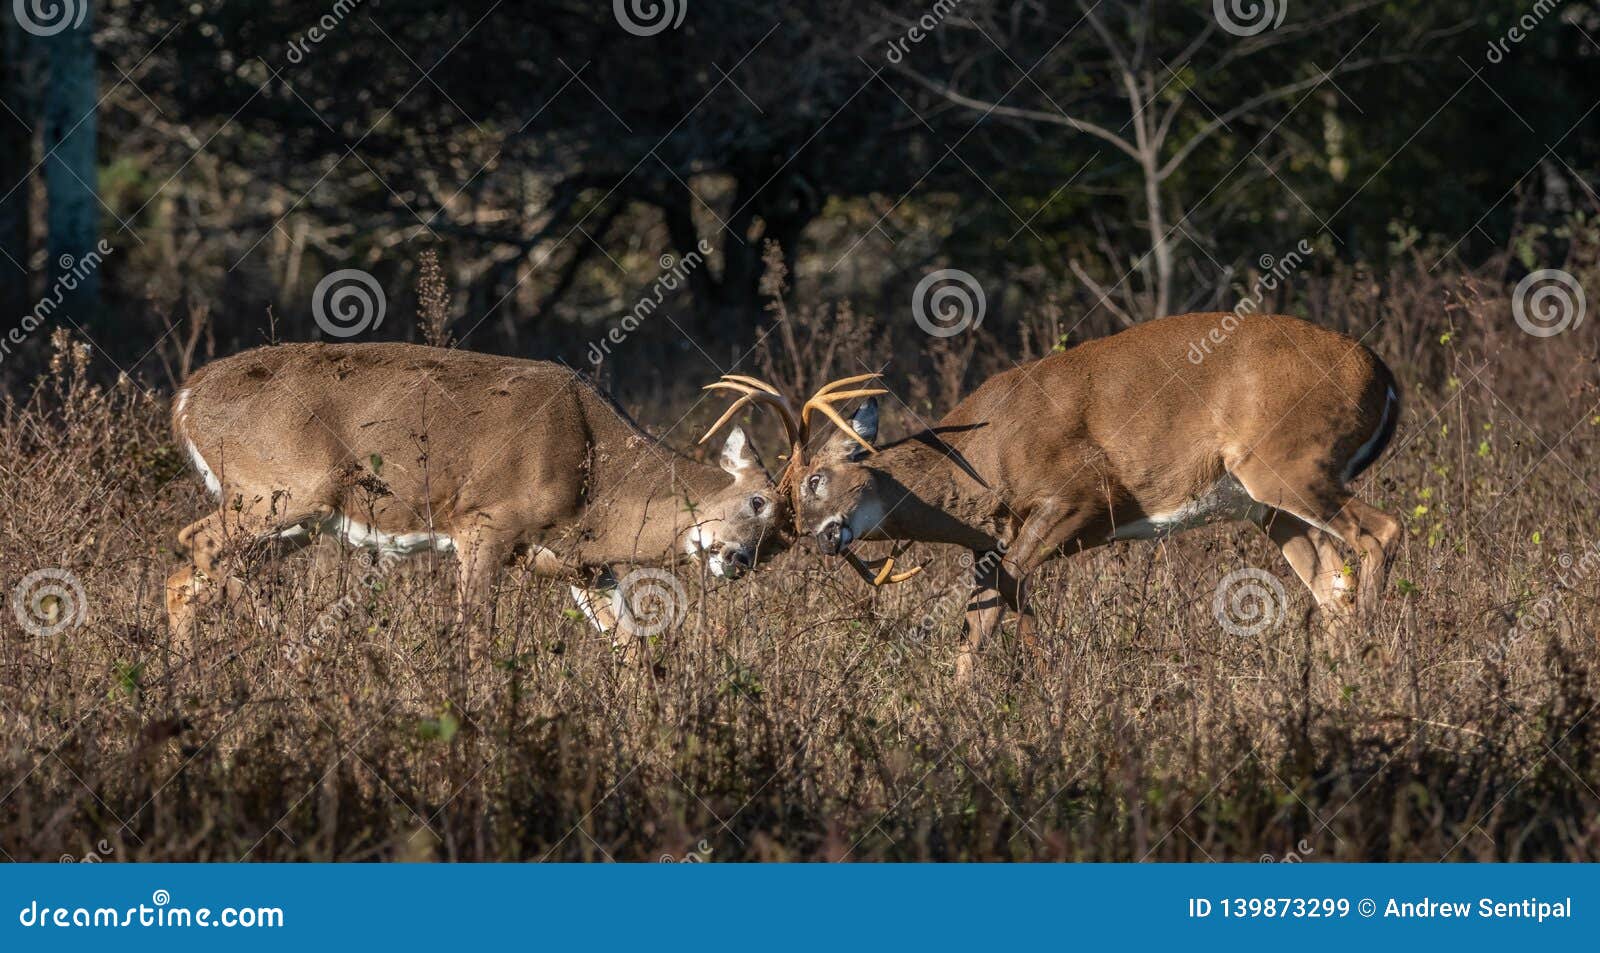 two bucks fighting head to head